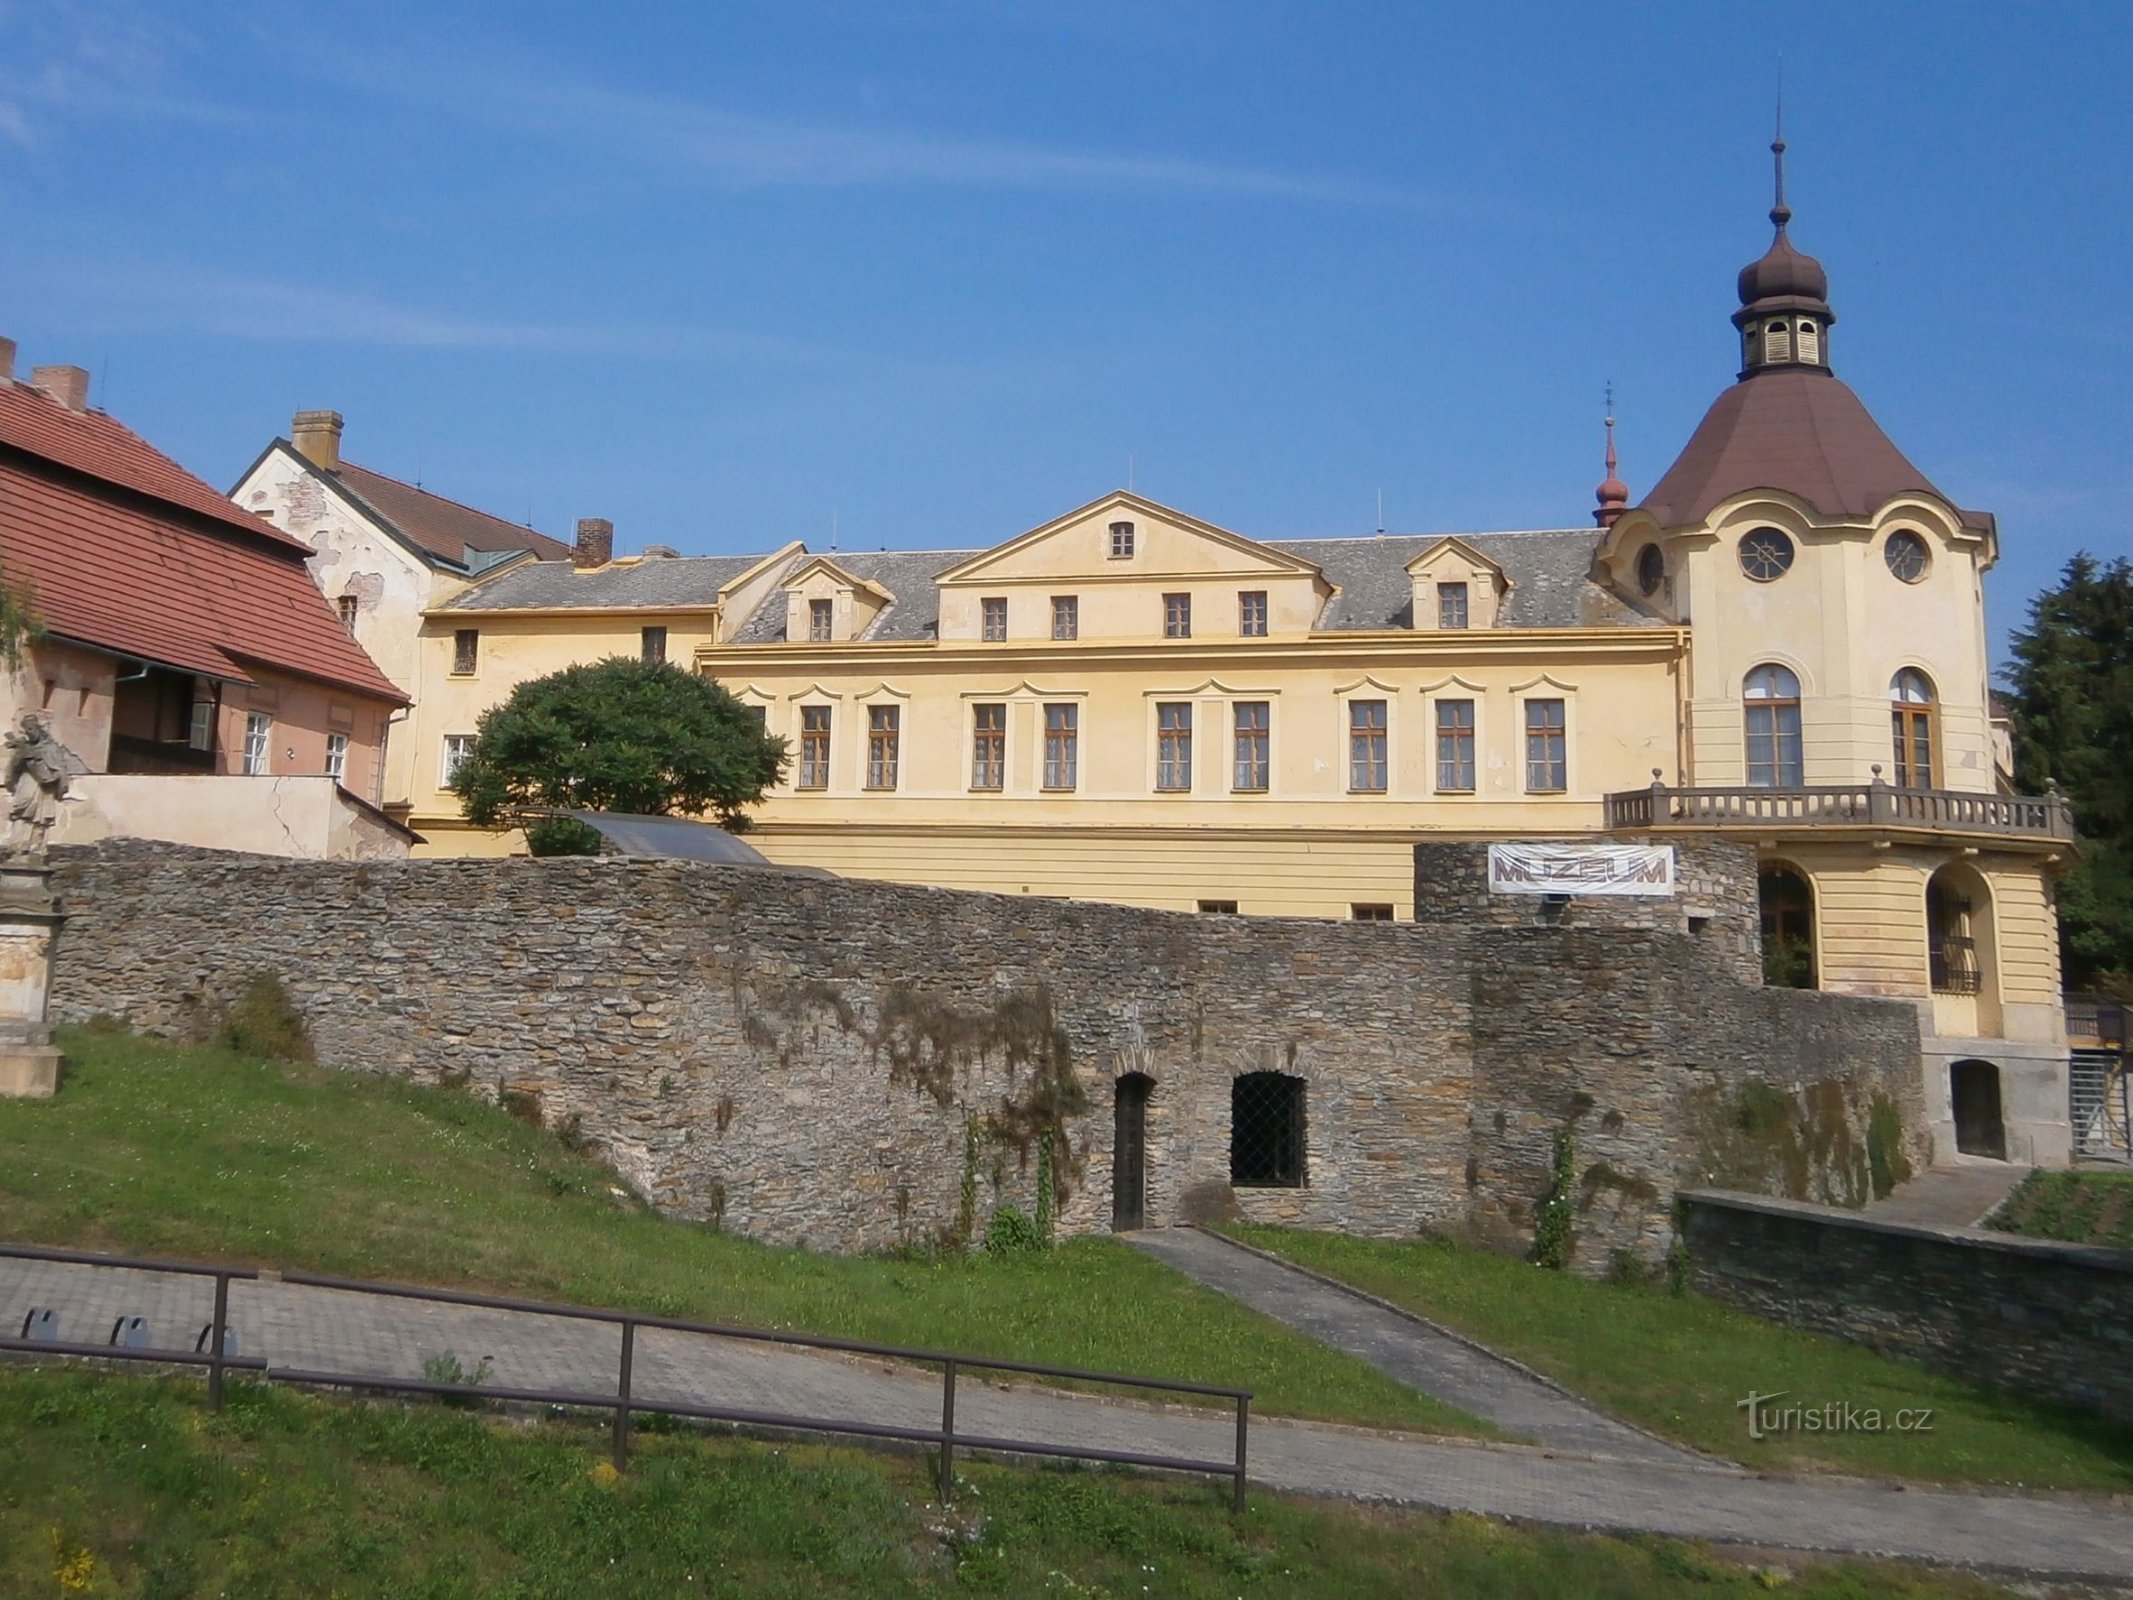 The outbuilding of the Steidler inn converted into a monastery (Česká Skalice, 5.7.2017 July XNUMX)